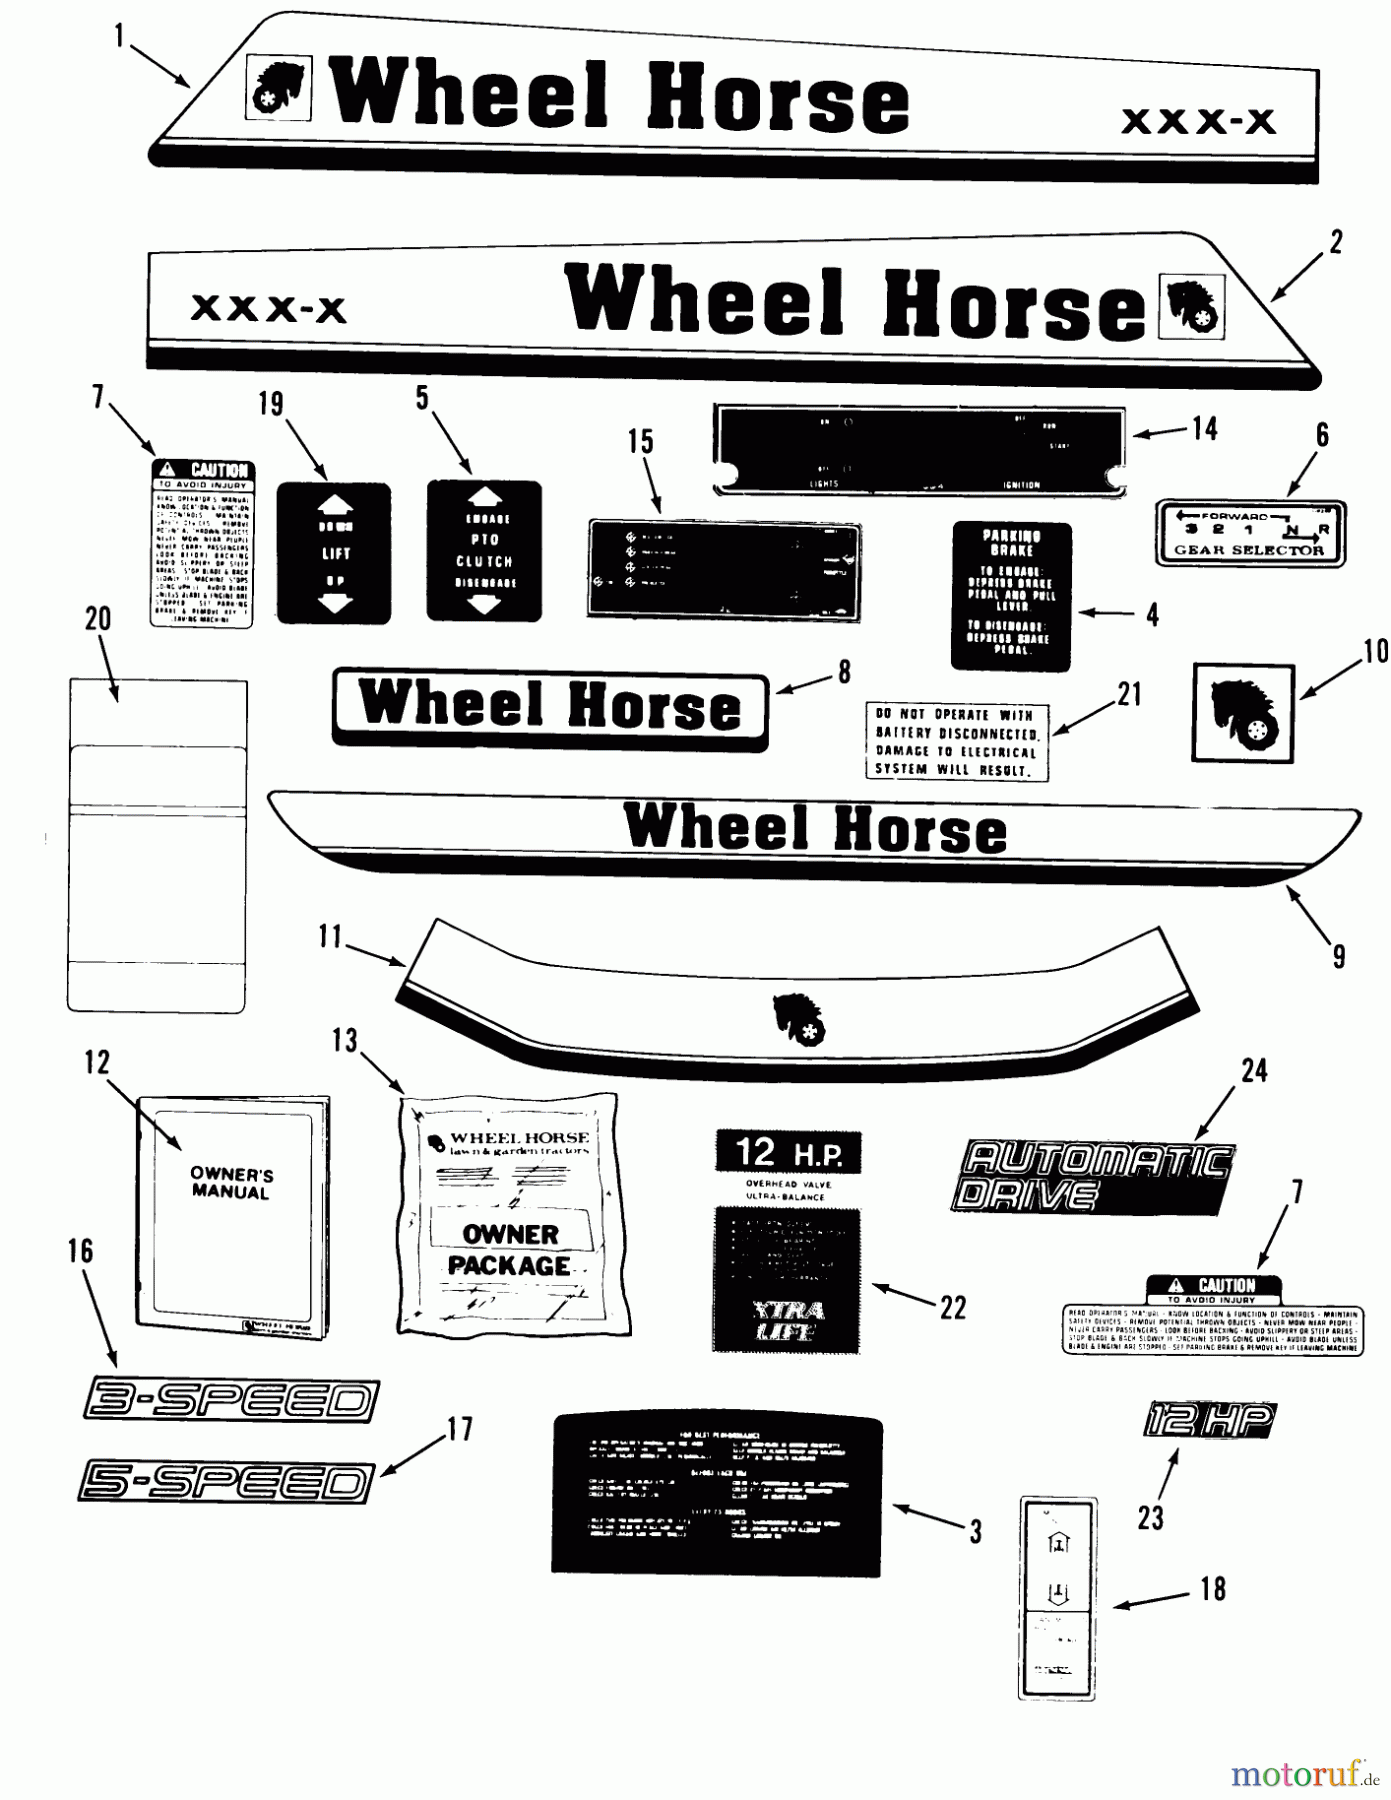  Toro Neu Mowers, Lawn & Garden Tractor Seite 1 22-11B302 (211-3) - Toro 211-3 Tractor, 1986 DECALS, MISCELLANEOUS